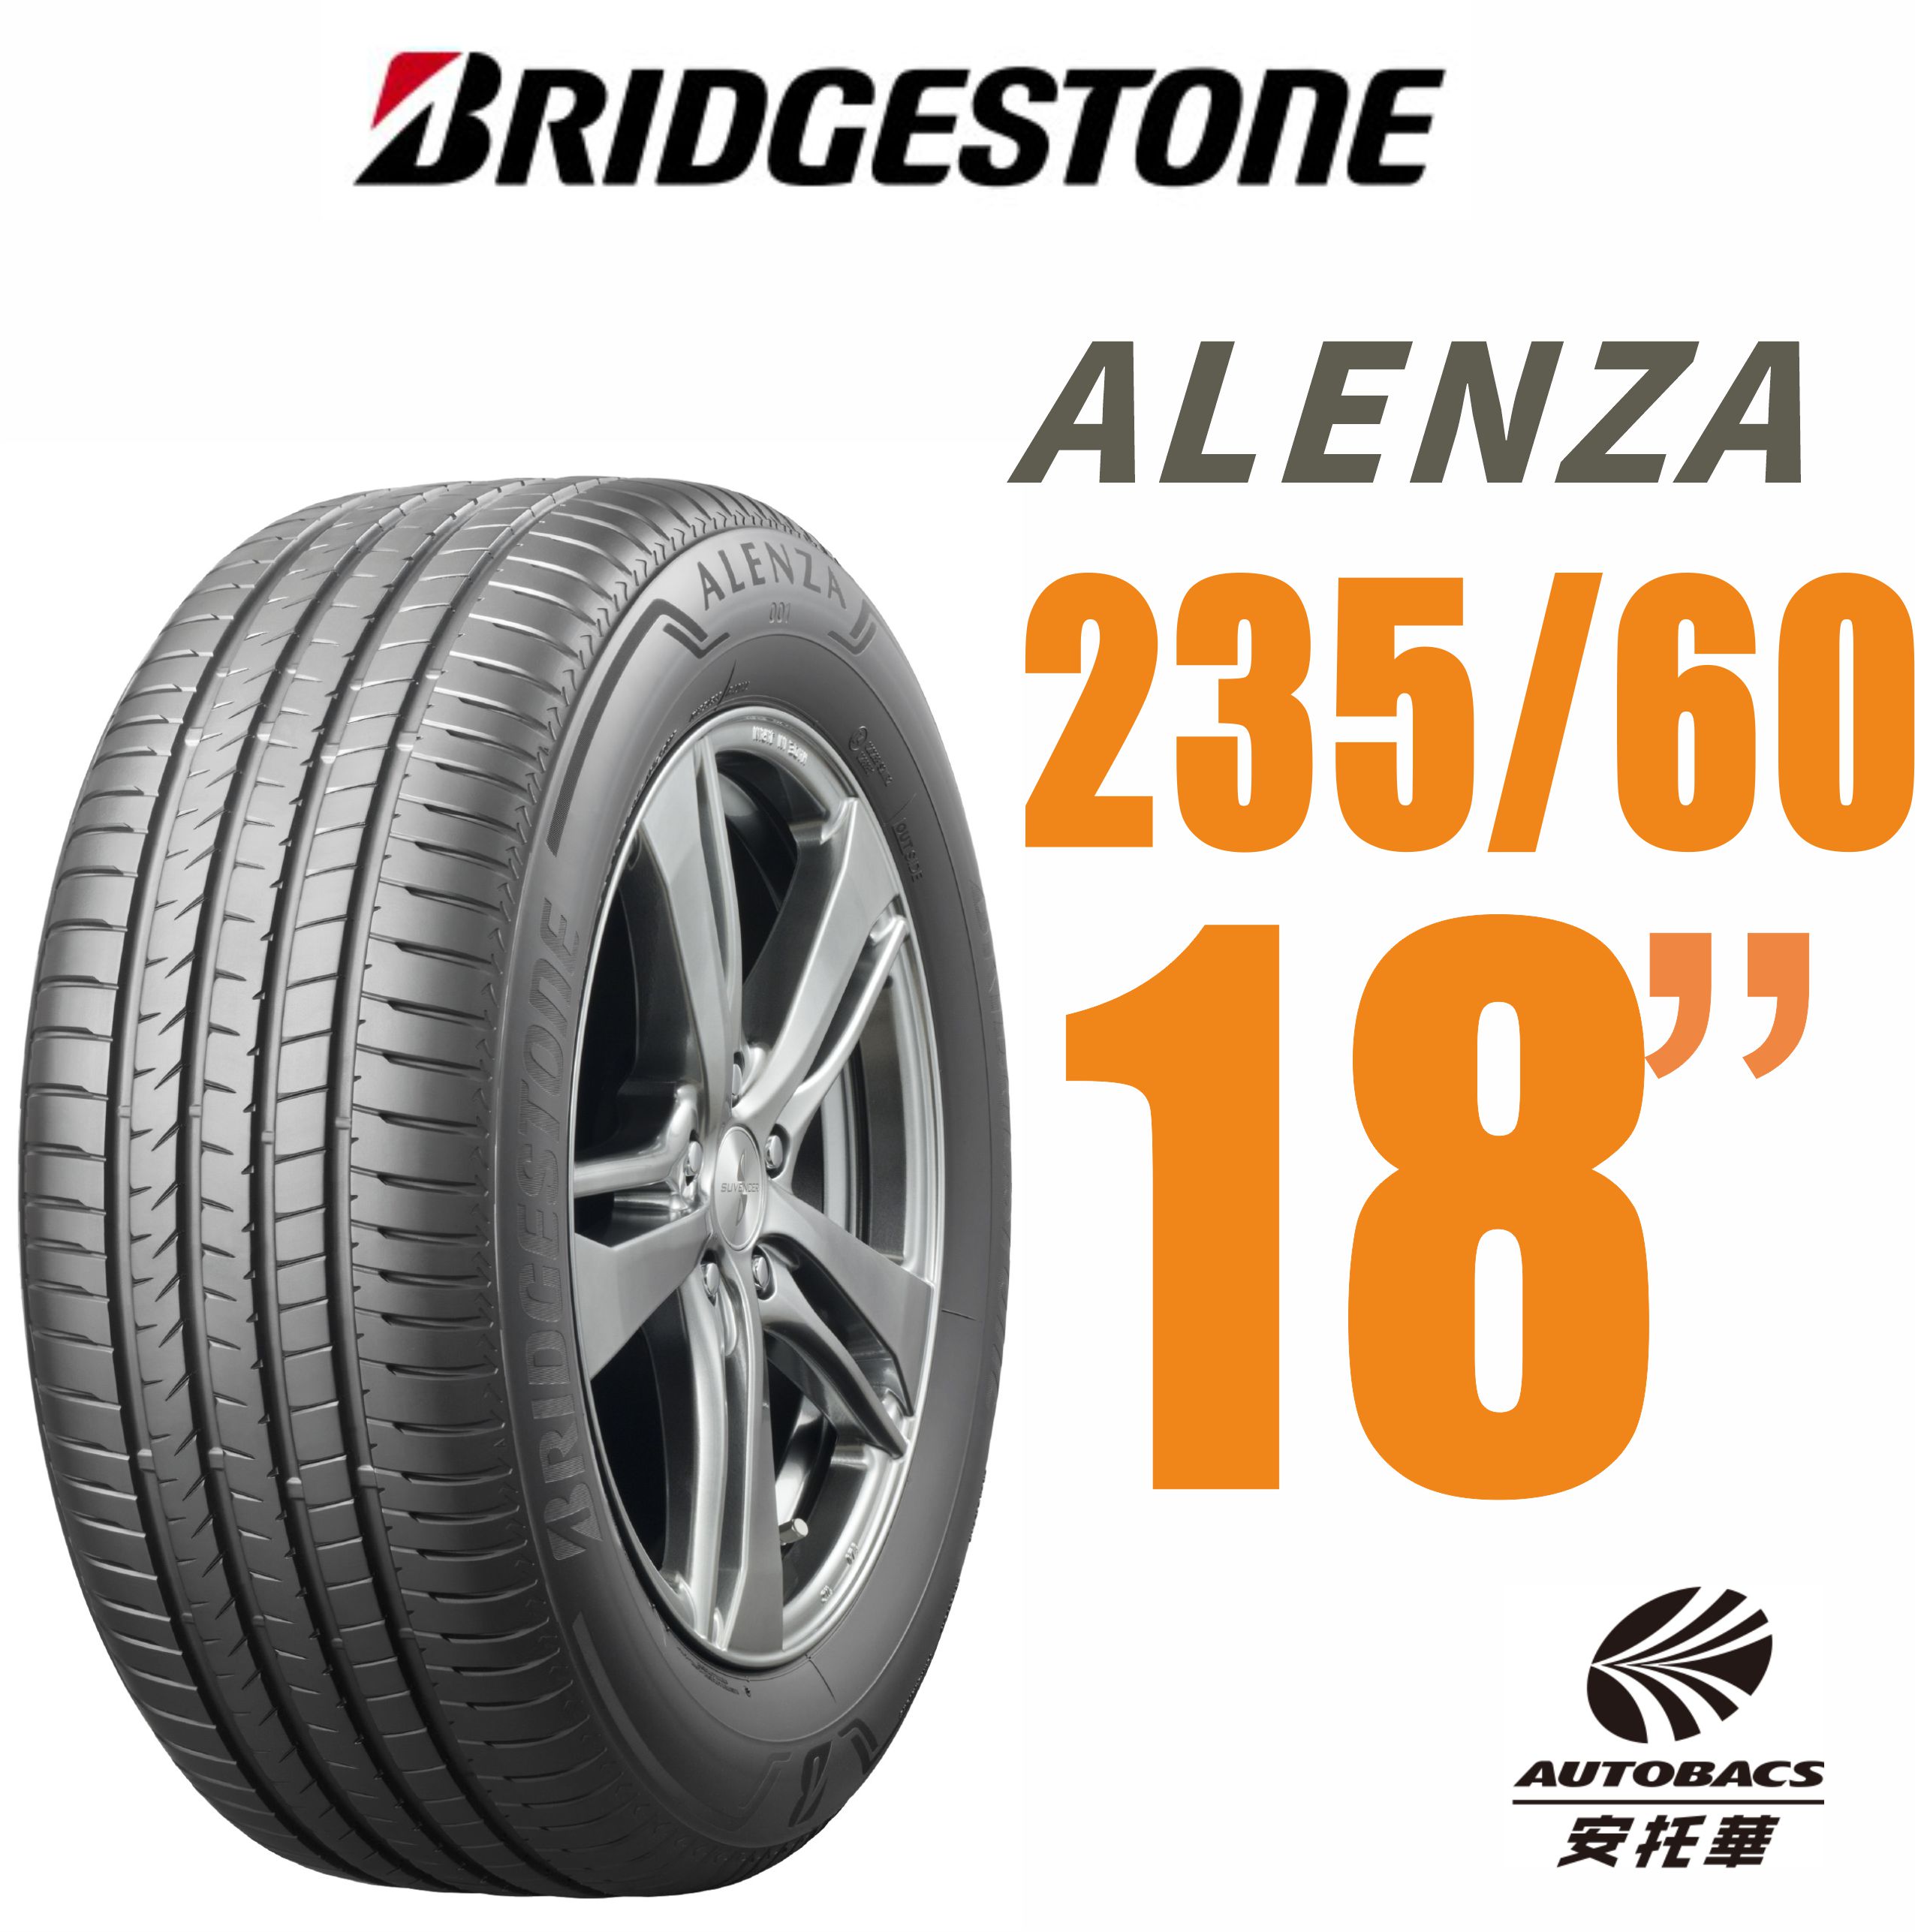 BRIDGESTONE普利司通輪胎Alenza 235/60/18 適用CRV五.RX350等車款